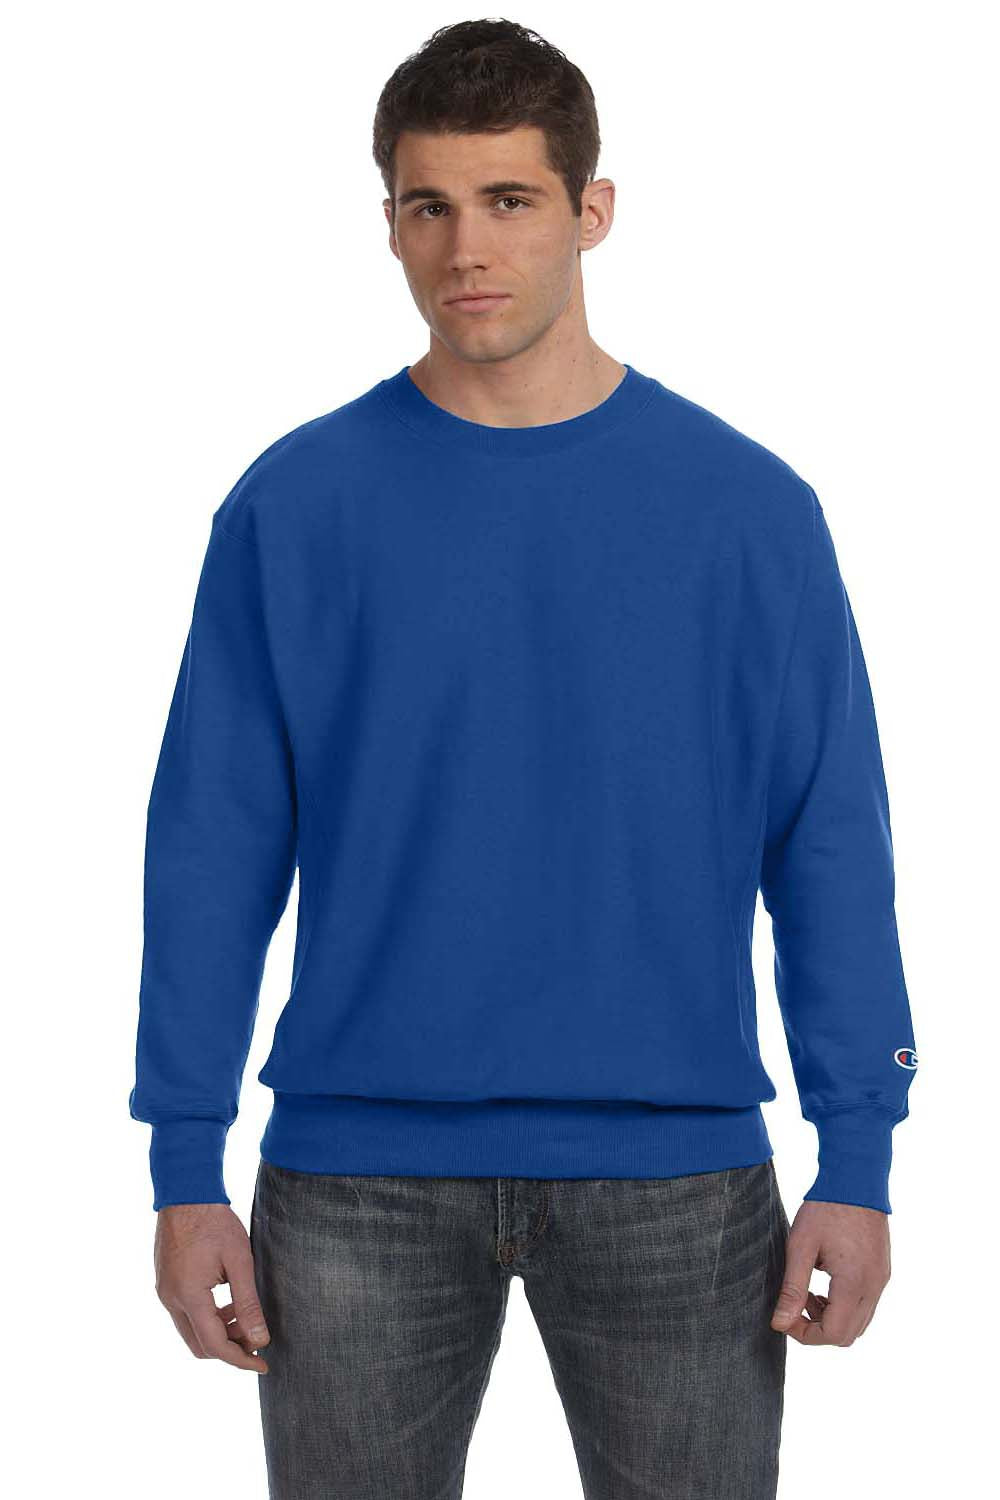 S149/S1049 — Royal Athletic Sweatshirt Mens Blue Champion Crewneck